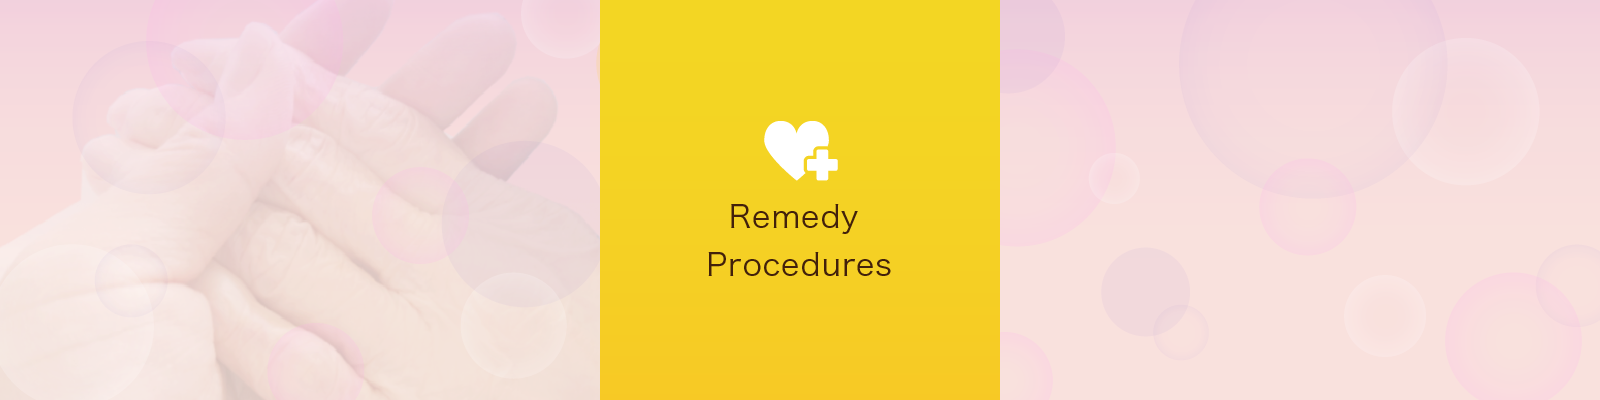 Remedy Procedures